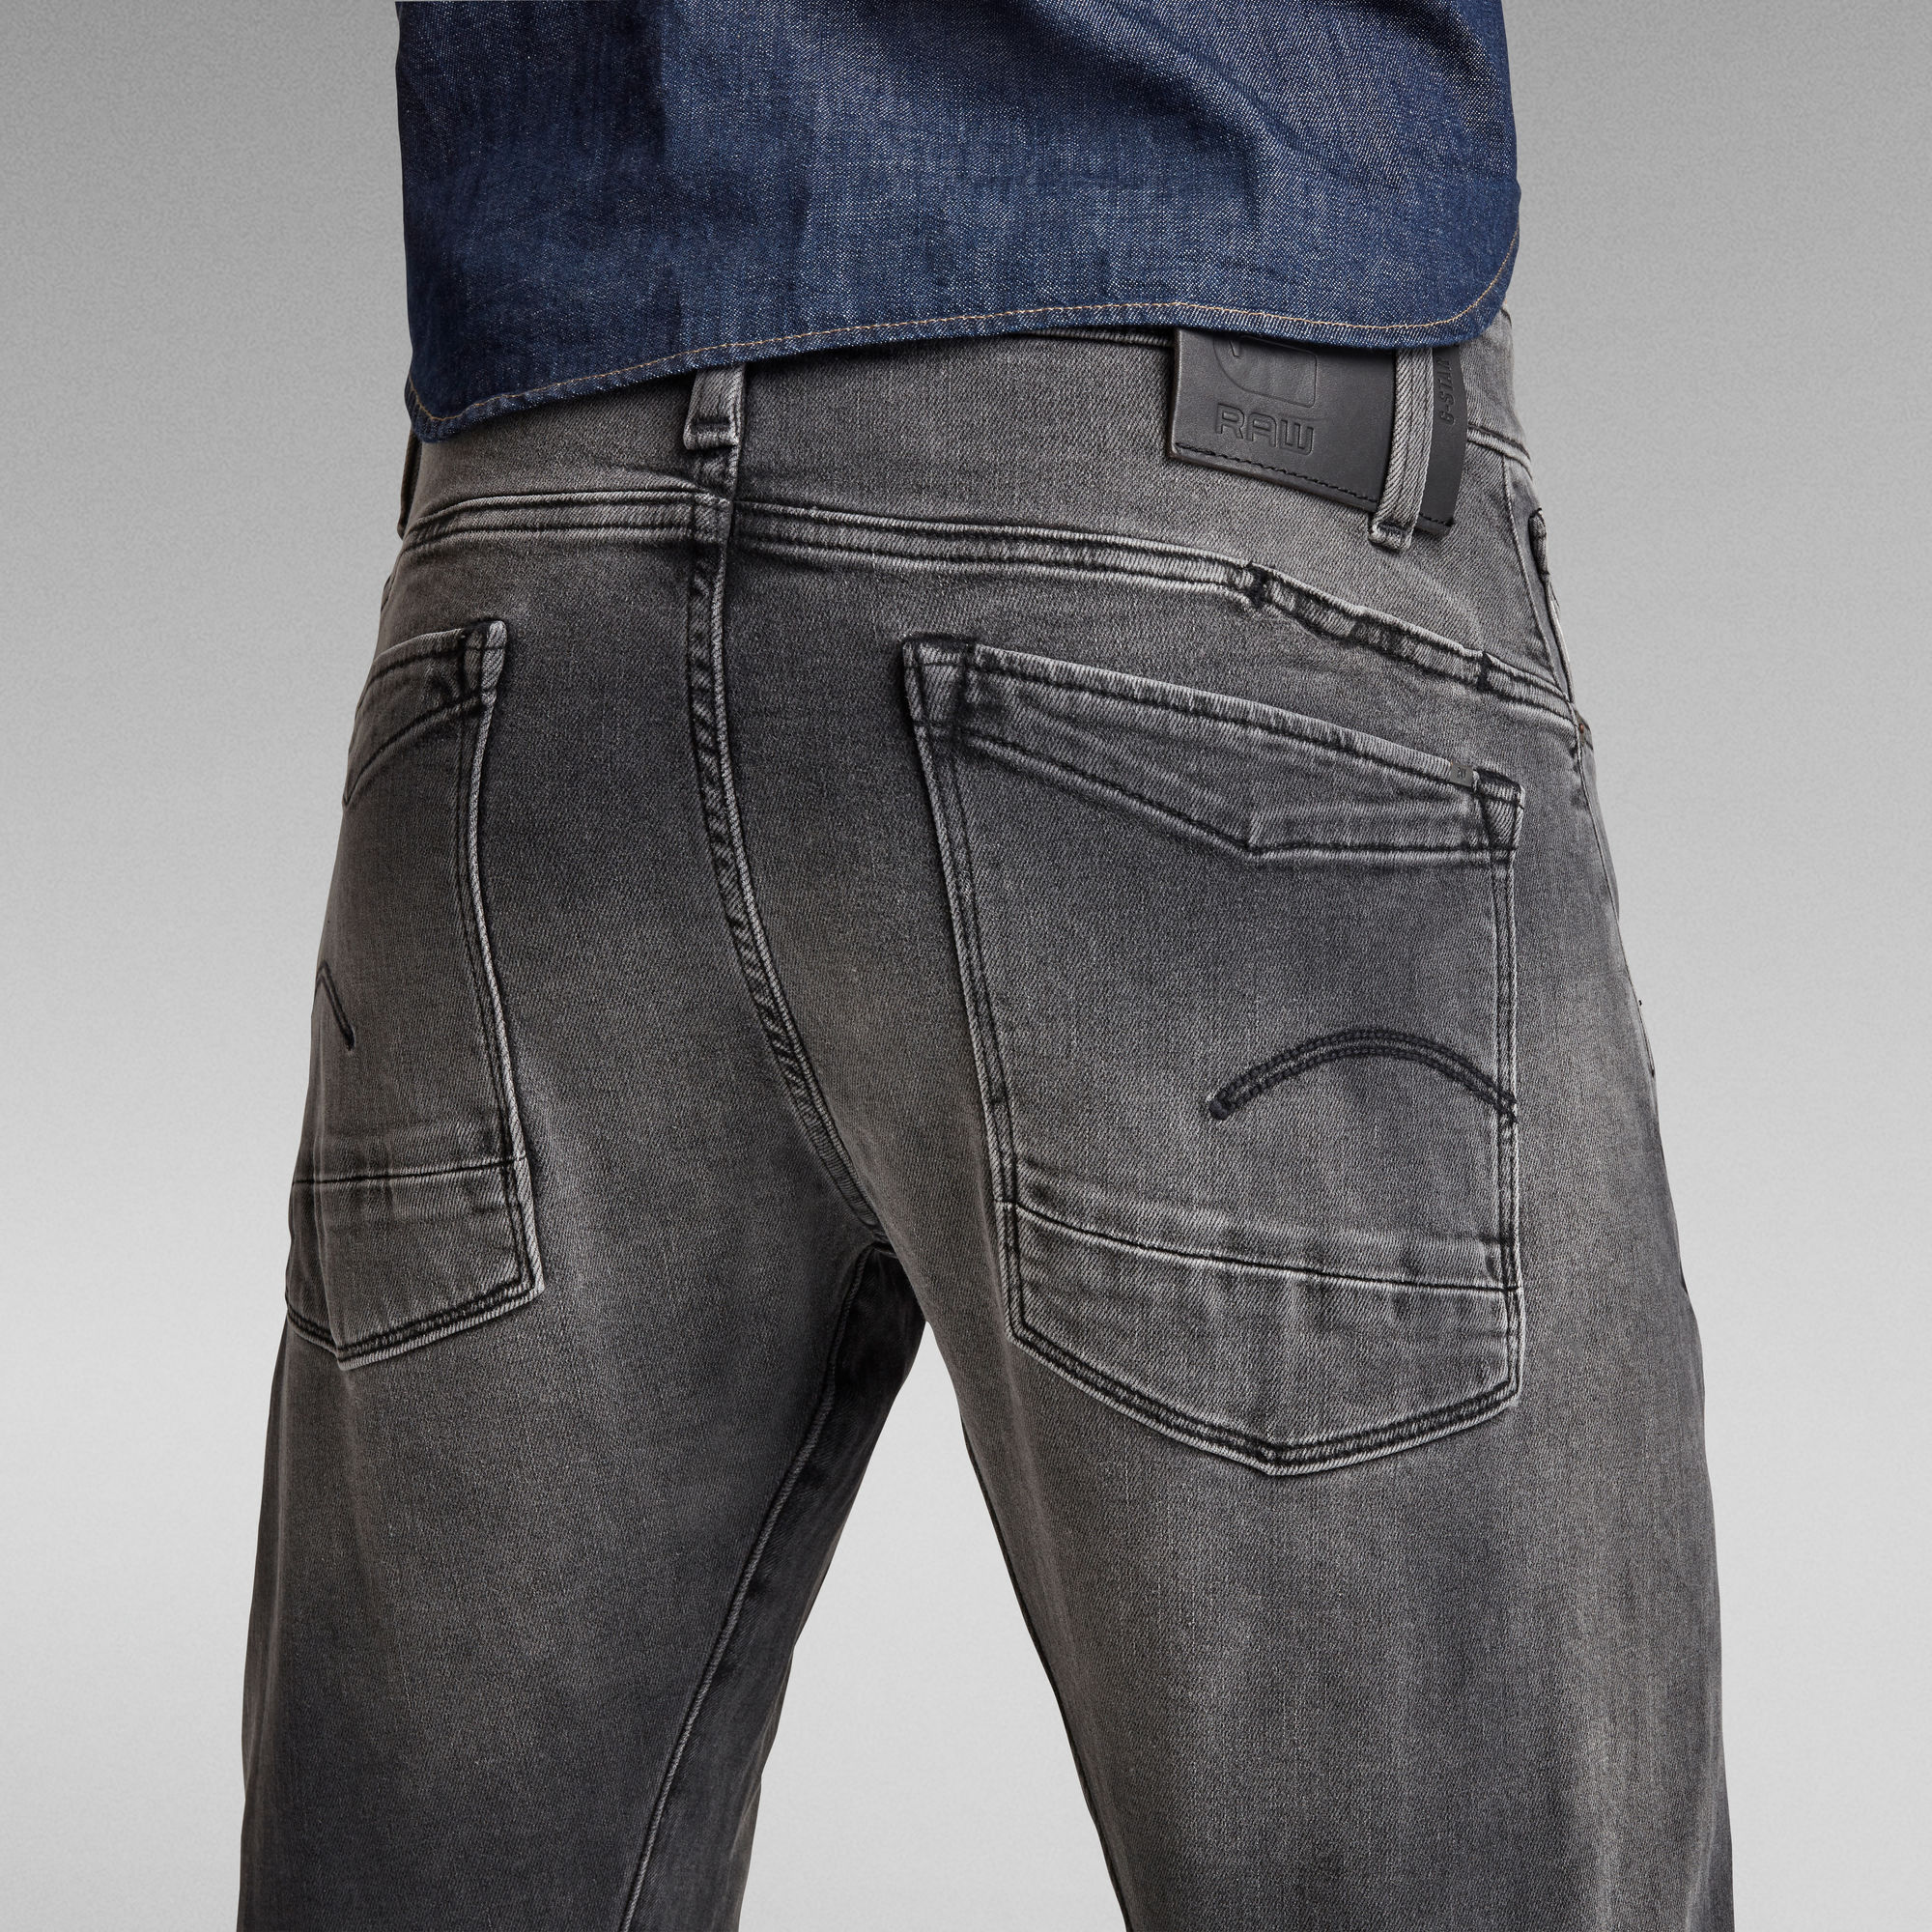 Scutar 3D Tapered Jeans | Black | G-Star RAW®